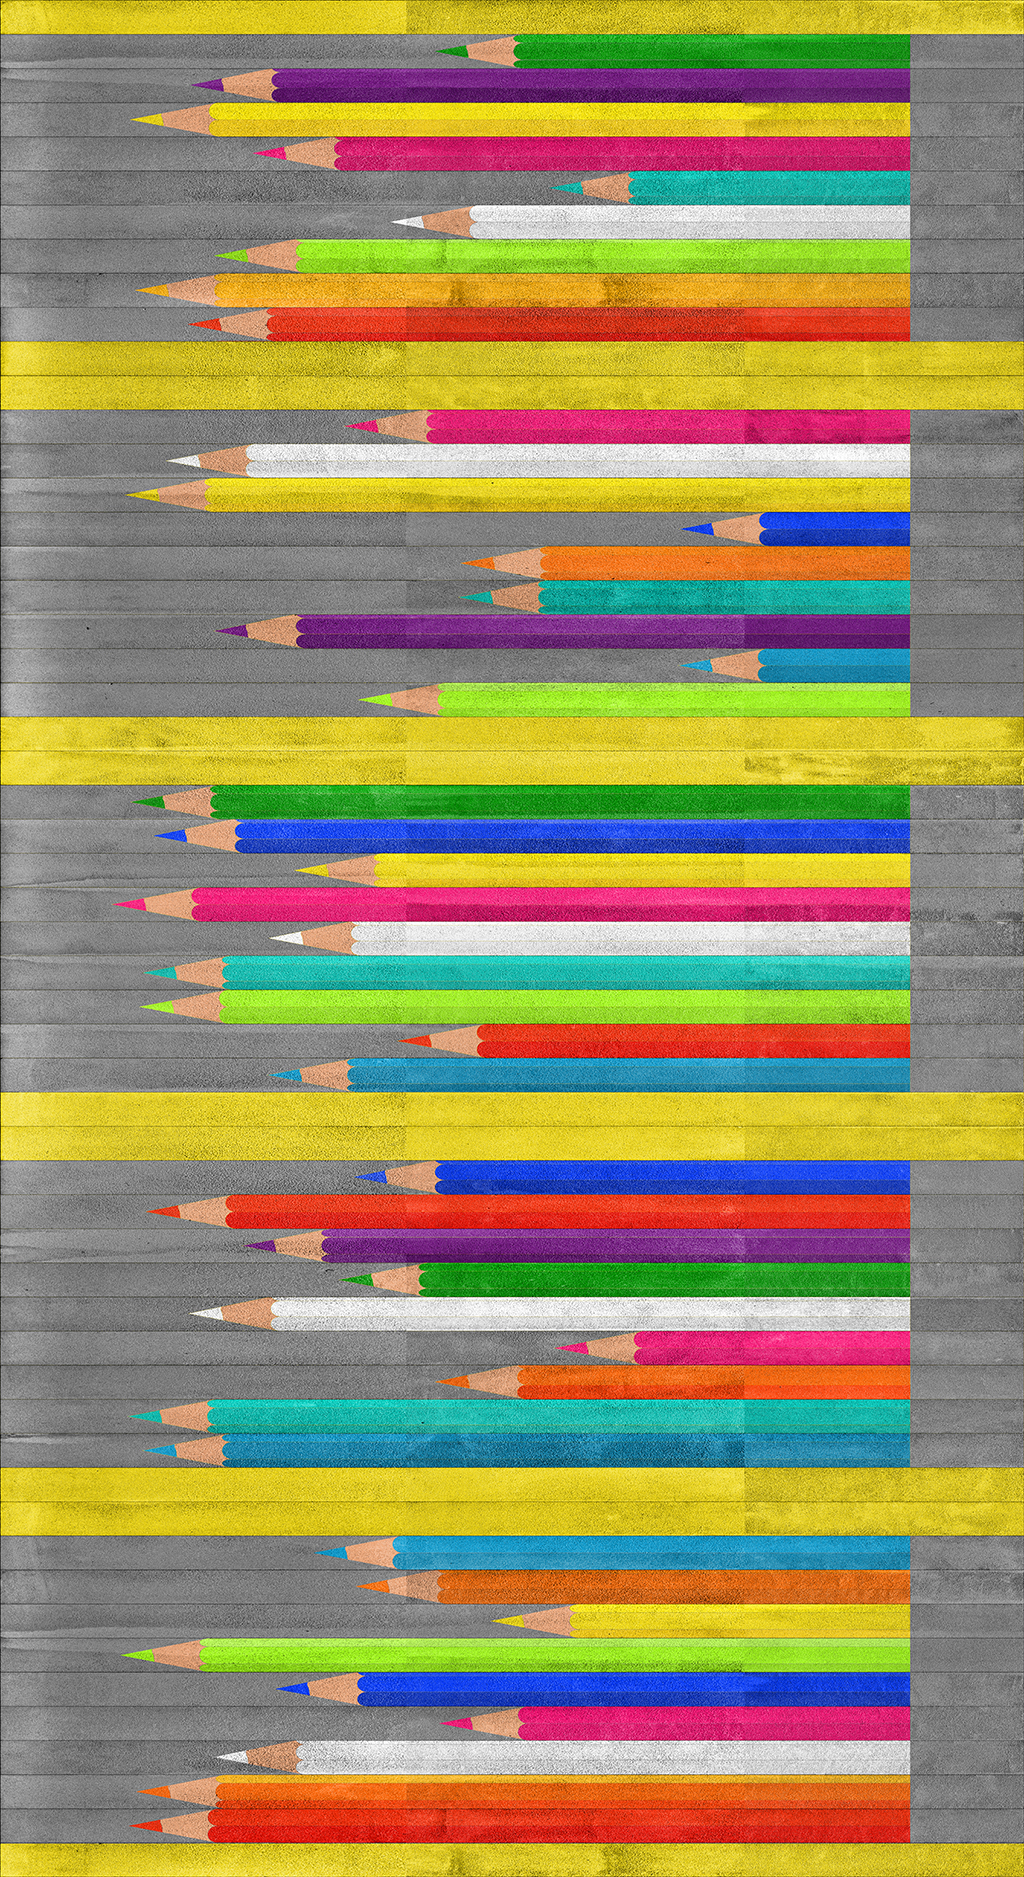 art artwork streetart pencils coloroed pencils takmaj majawronska maja wronska